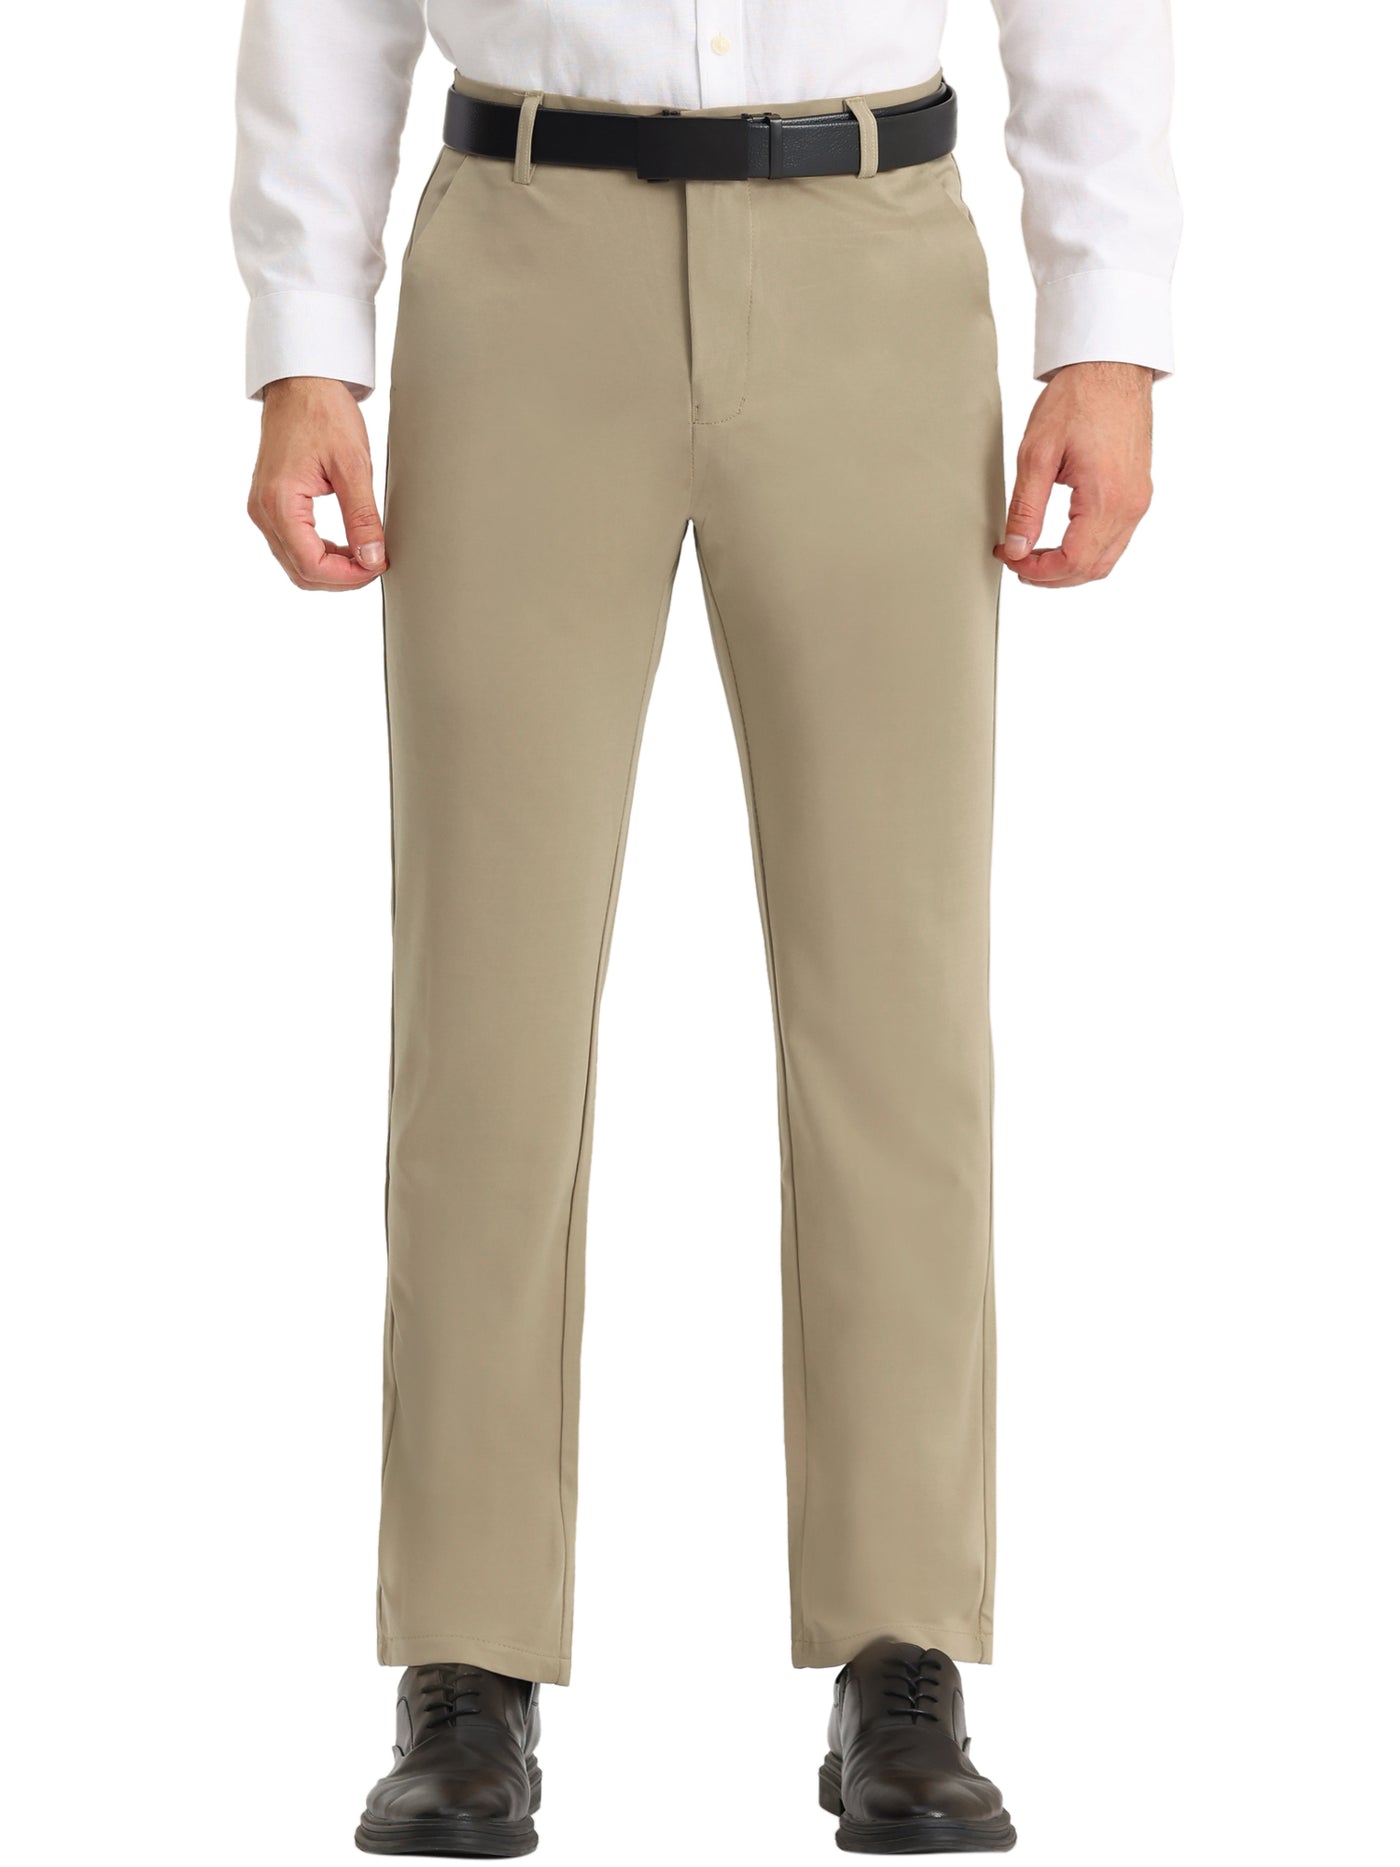 Bublédon Men's Classic Trousers Straight Fit Formal Work Wedding Dress Pants